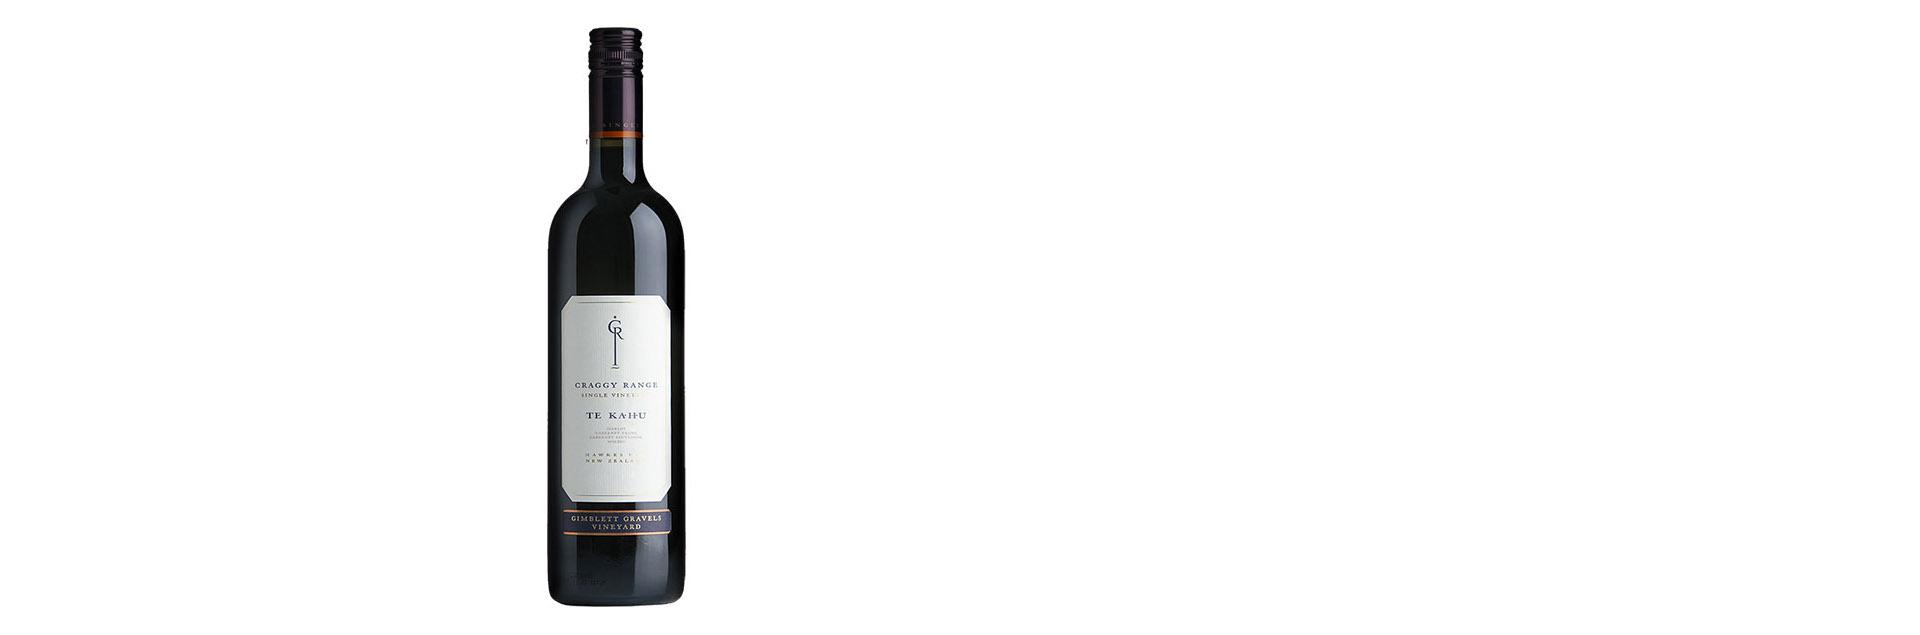 Rượu vang New Zealand Craggy Range "Te Kahu" Gimblett Gravels Vineyard